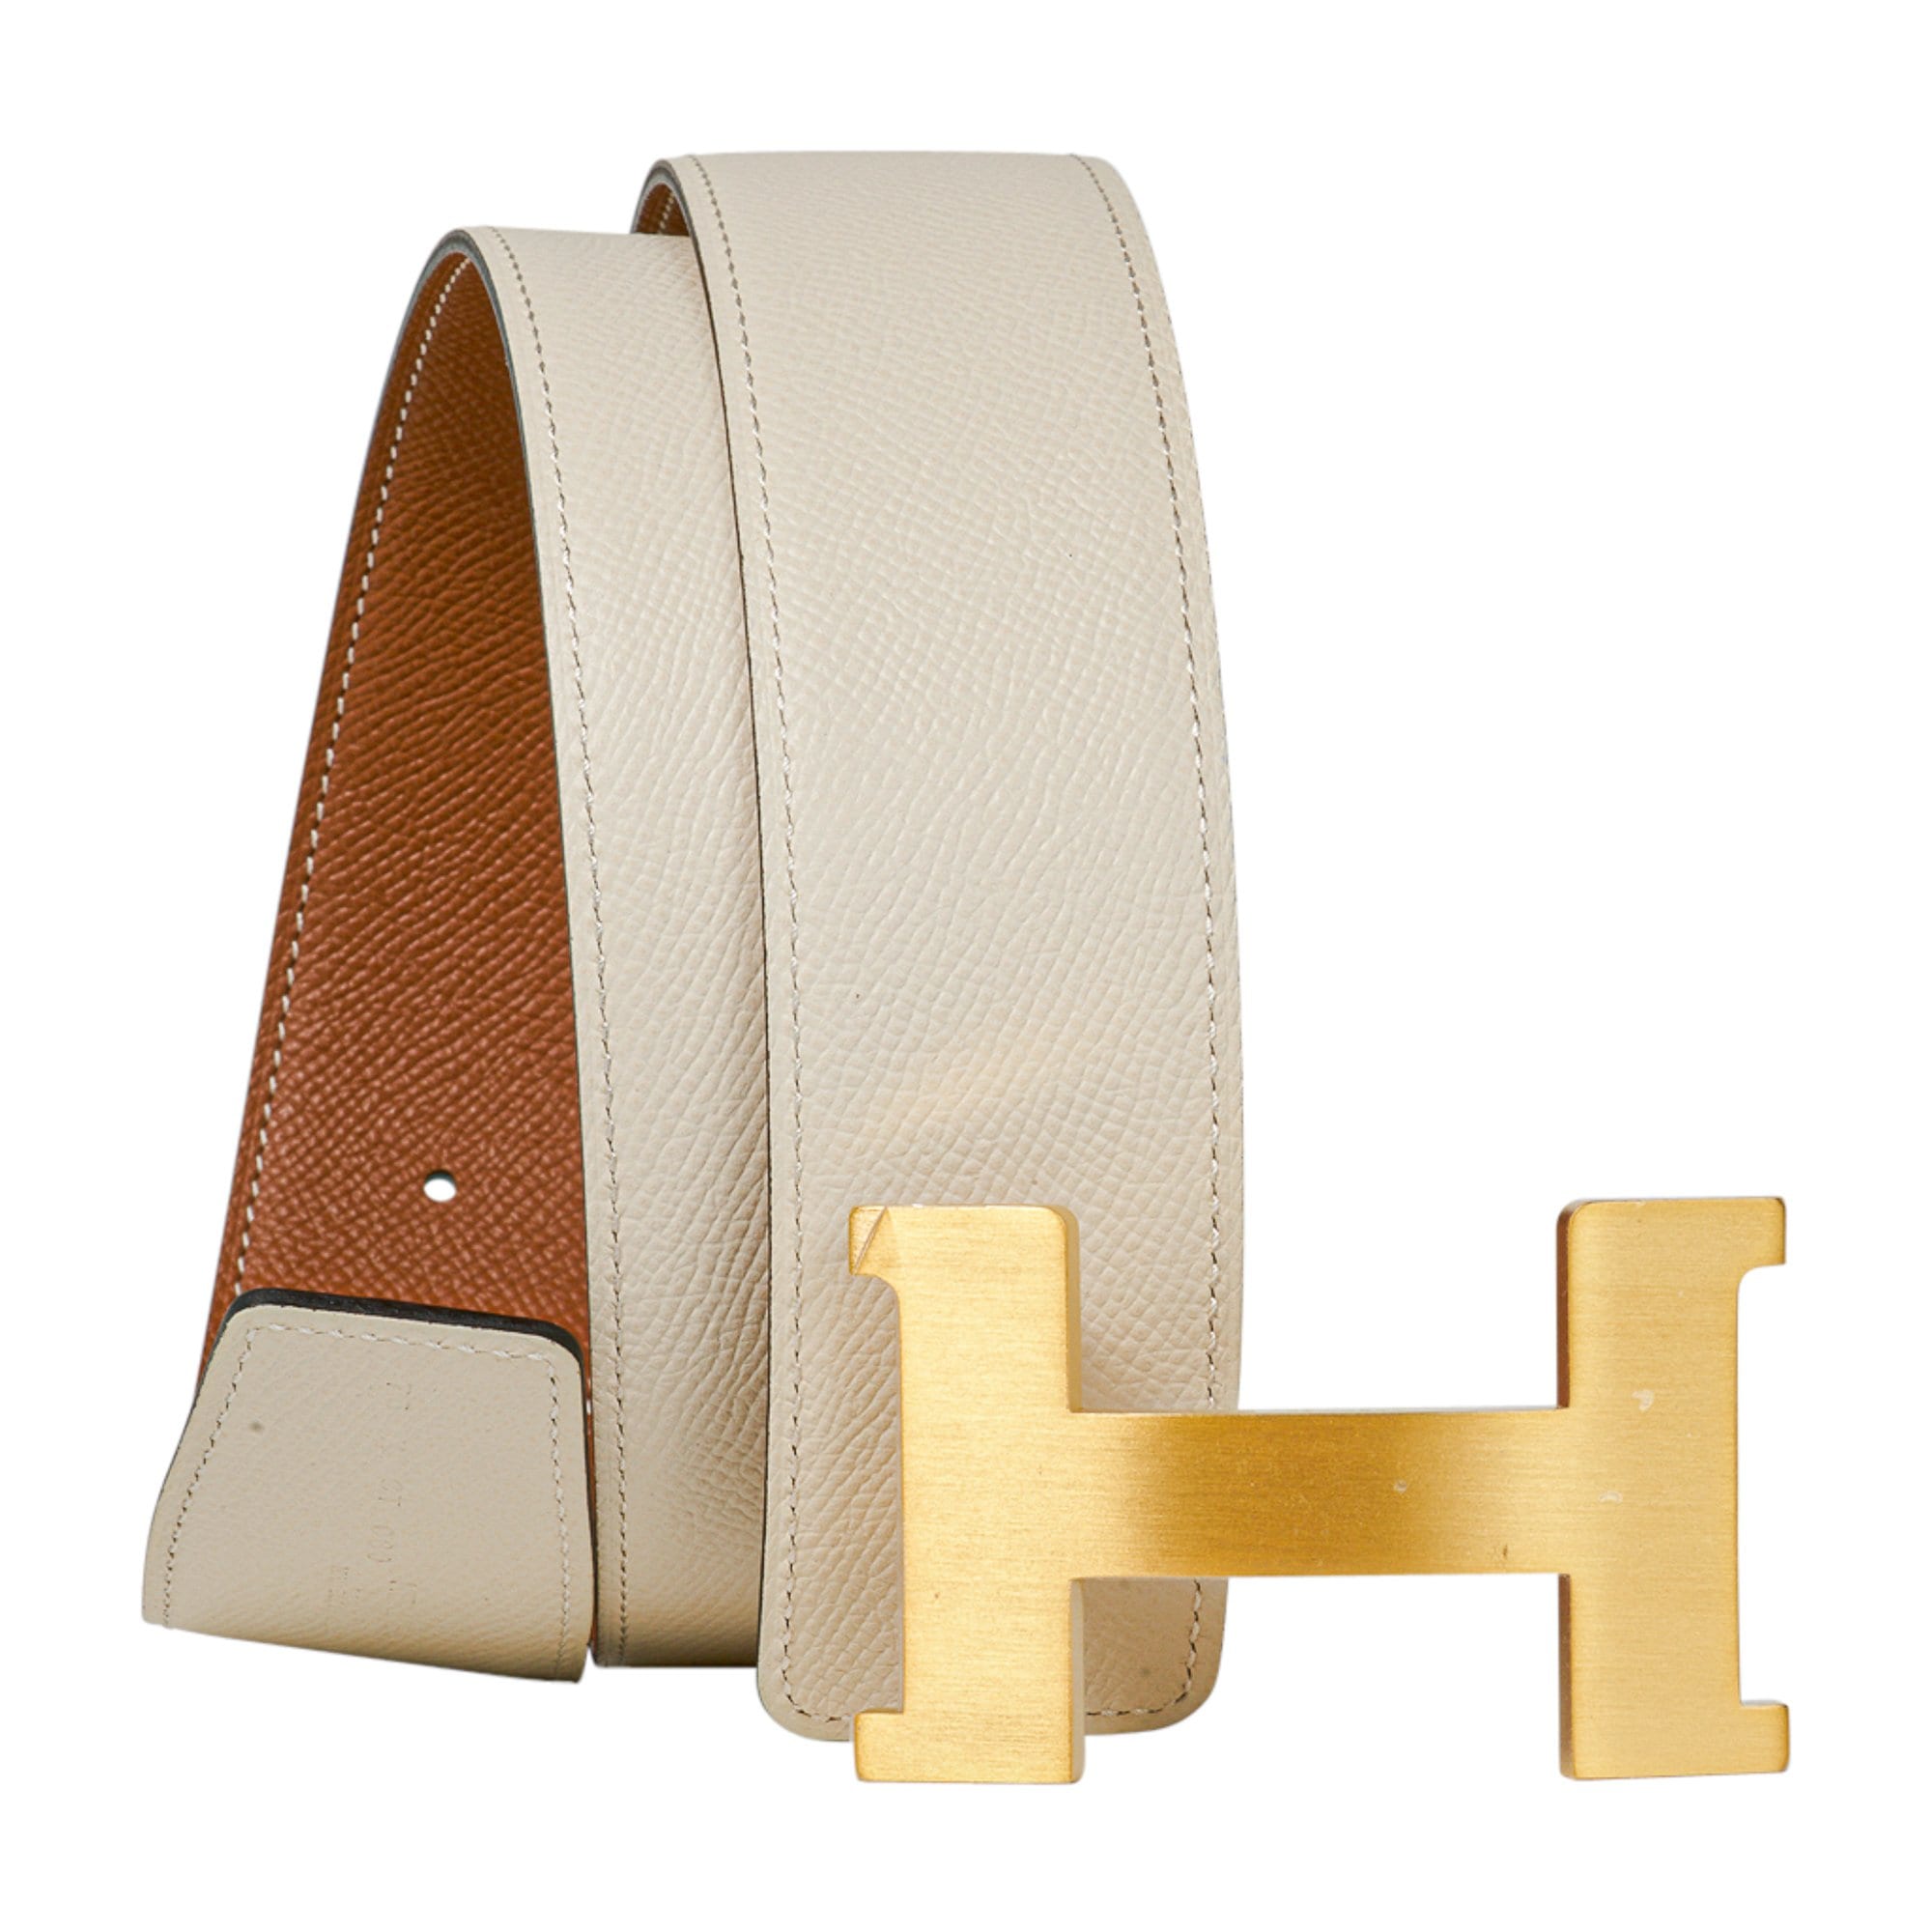 Hermes gold belt  Mens accessories shoes, Mens belts, Fashion belts